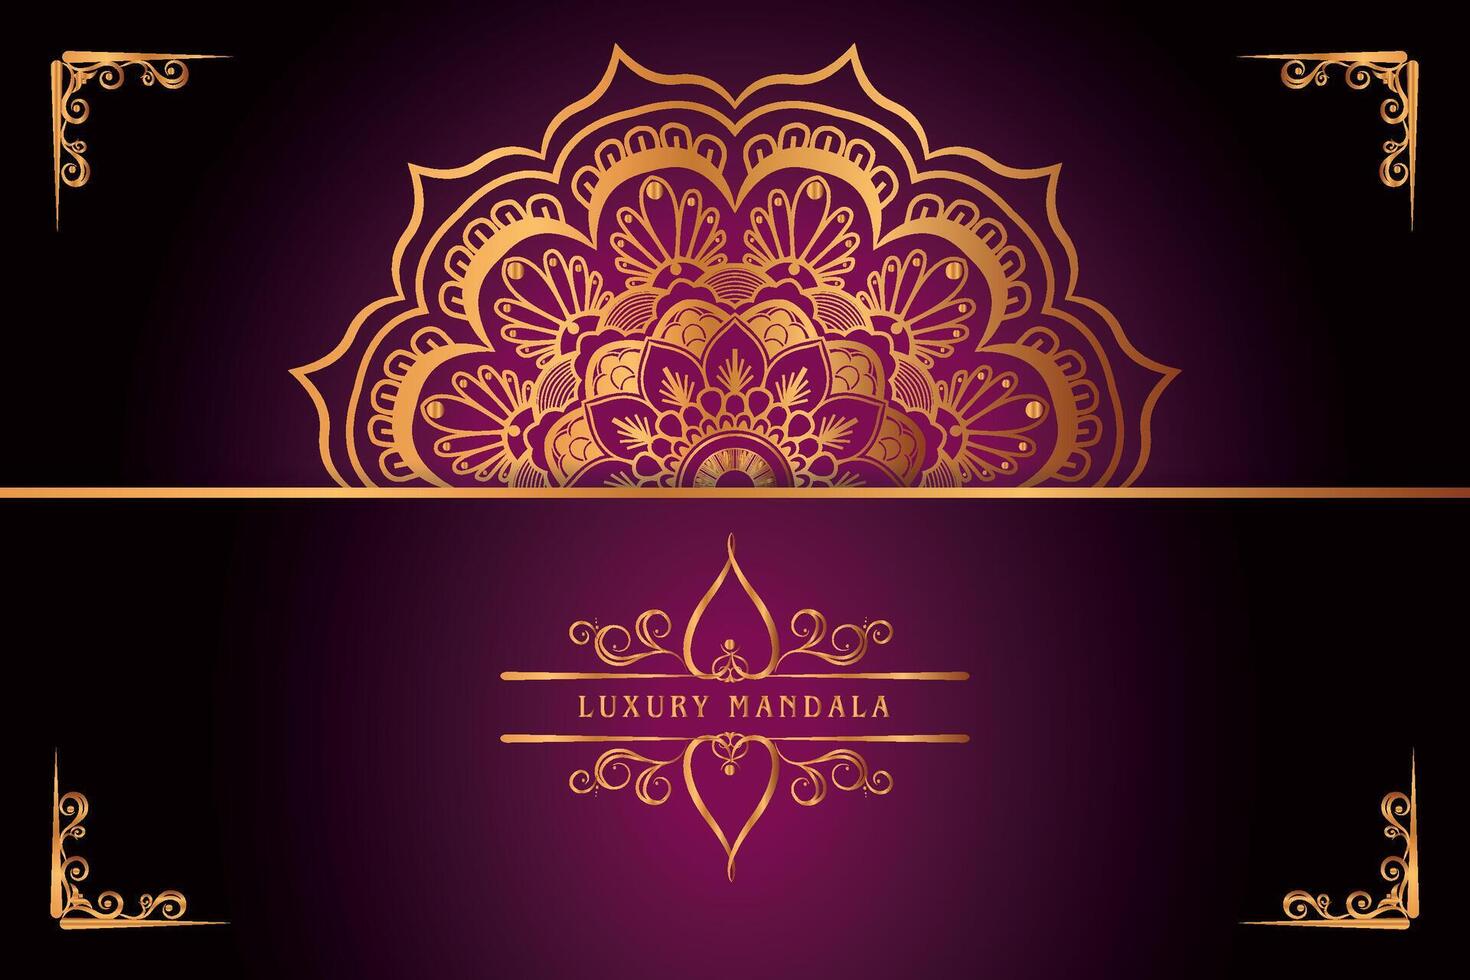 golden mandala design with gradients background vector